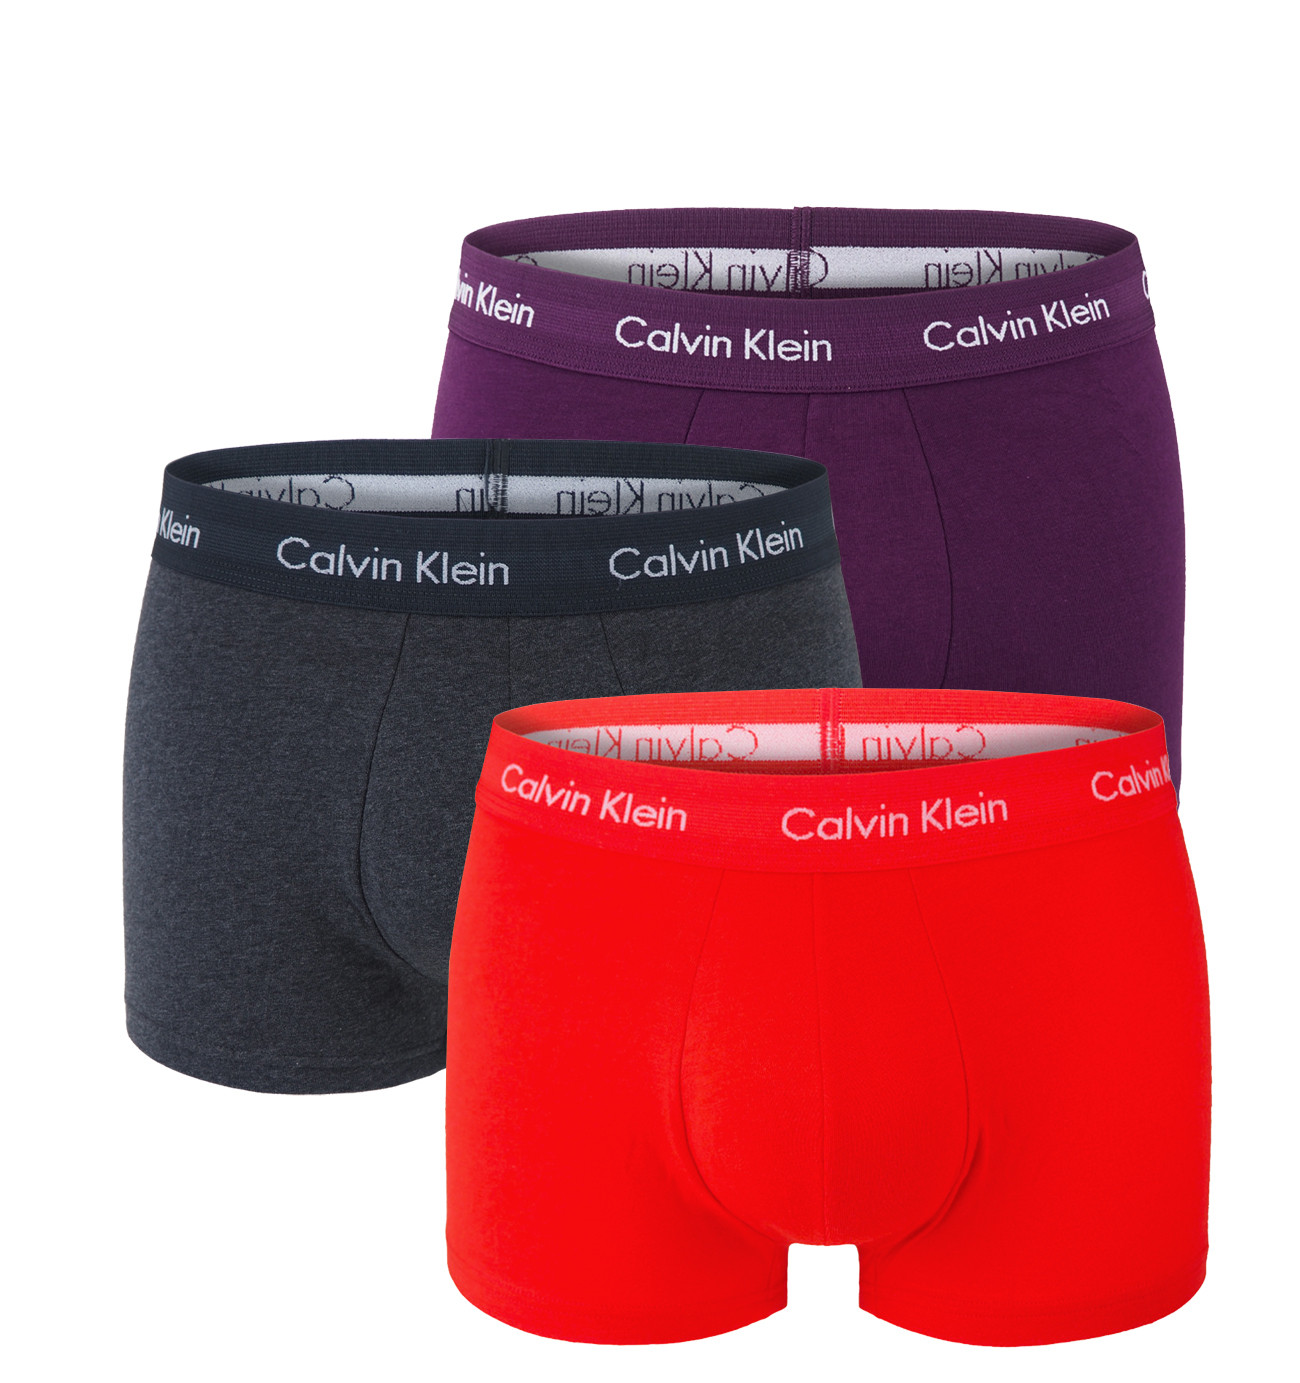 Calvin Klein – boxerky 3PACK cotton stretch burgundy & orange color – limitovaná edícia